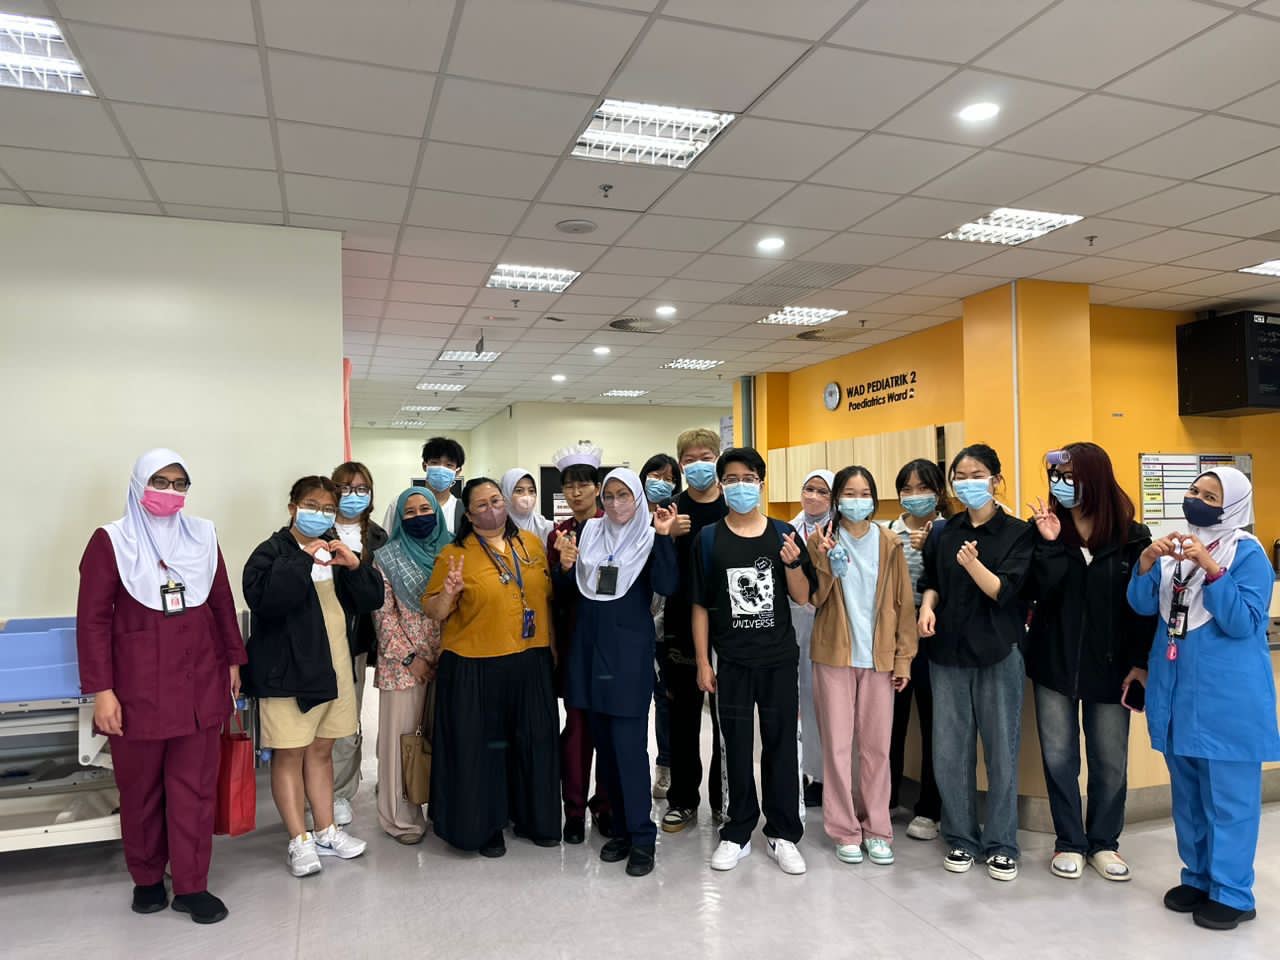 Visit by students from Lishui University, China to Sultan Abdul Aziz Shah Hospital (HSAAS), Universiti Putra Malaysia